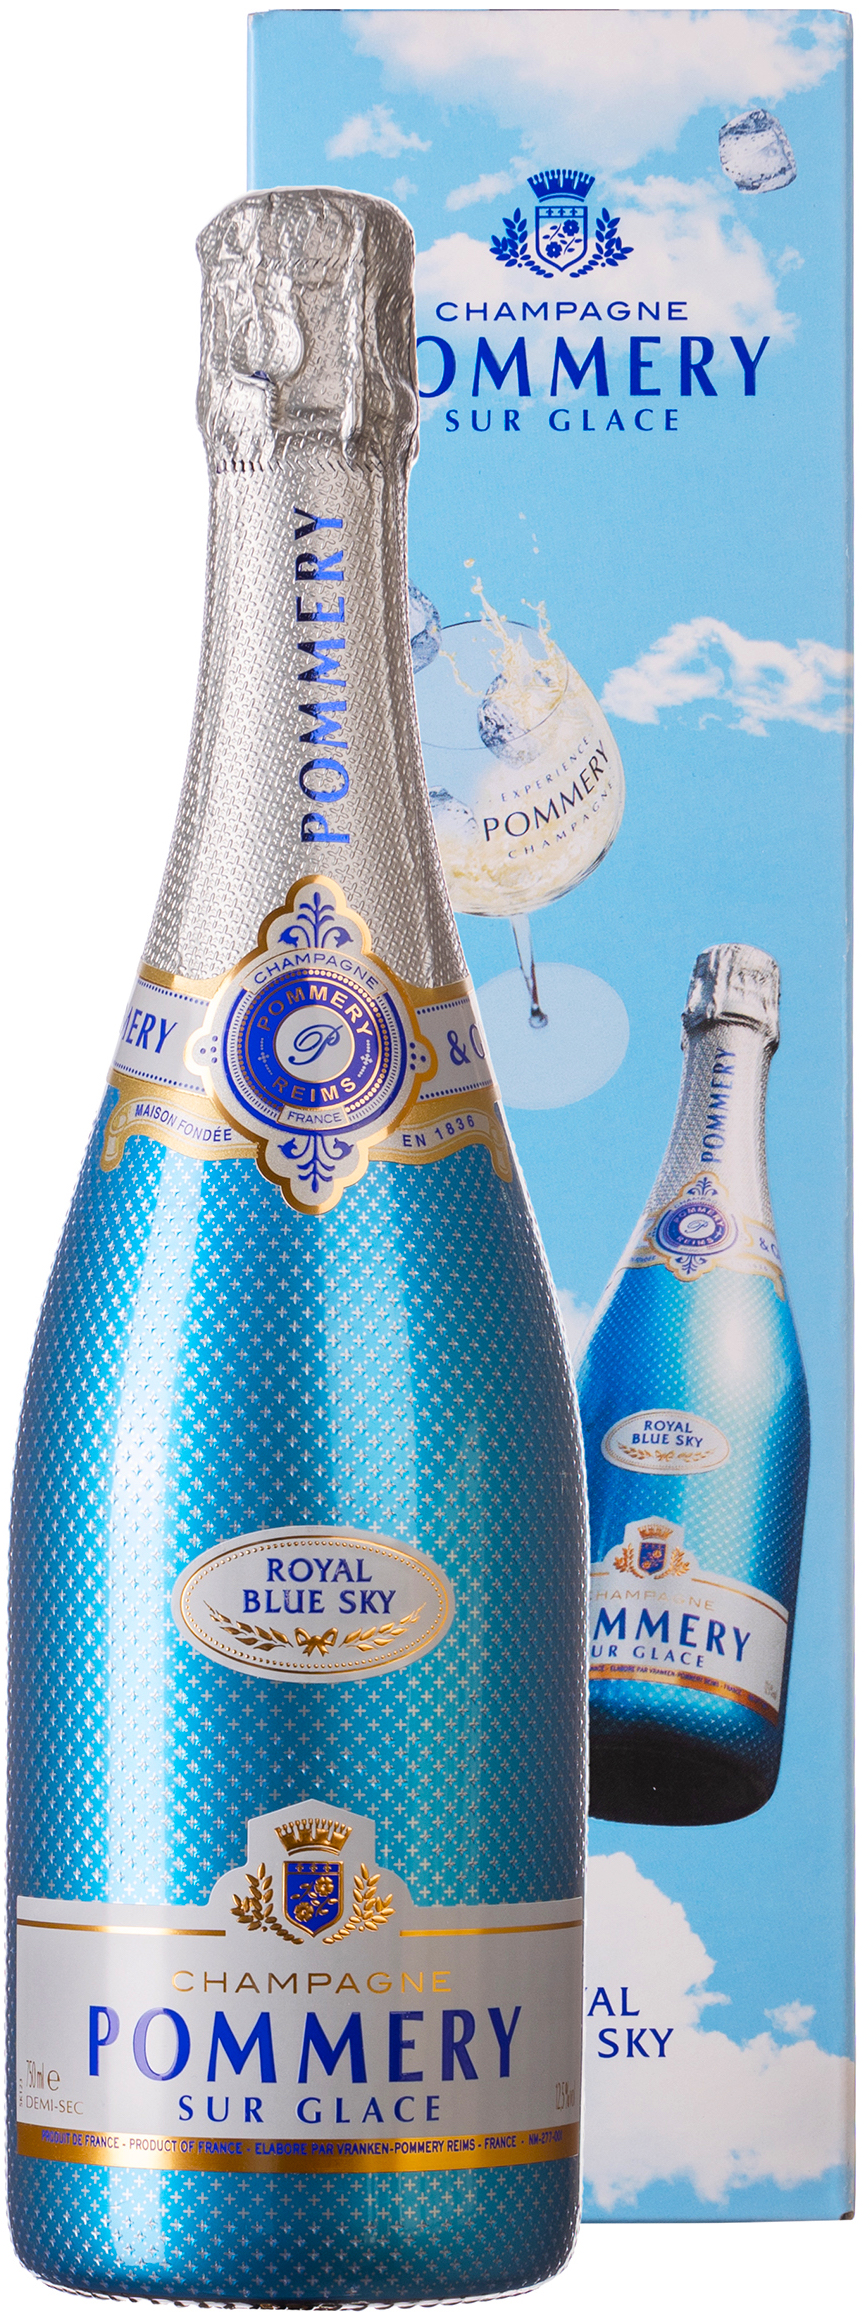 Pommery Royal Blue Sky Champagner 12,5% vol. 0,75L